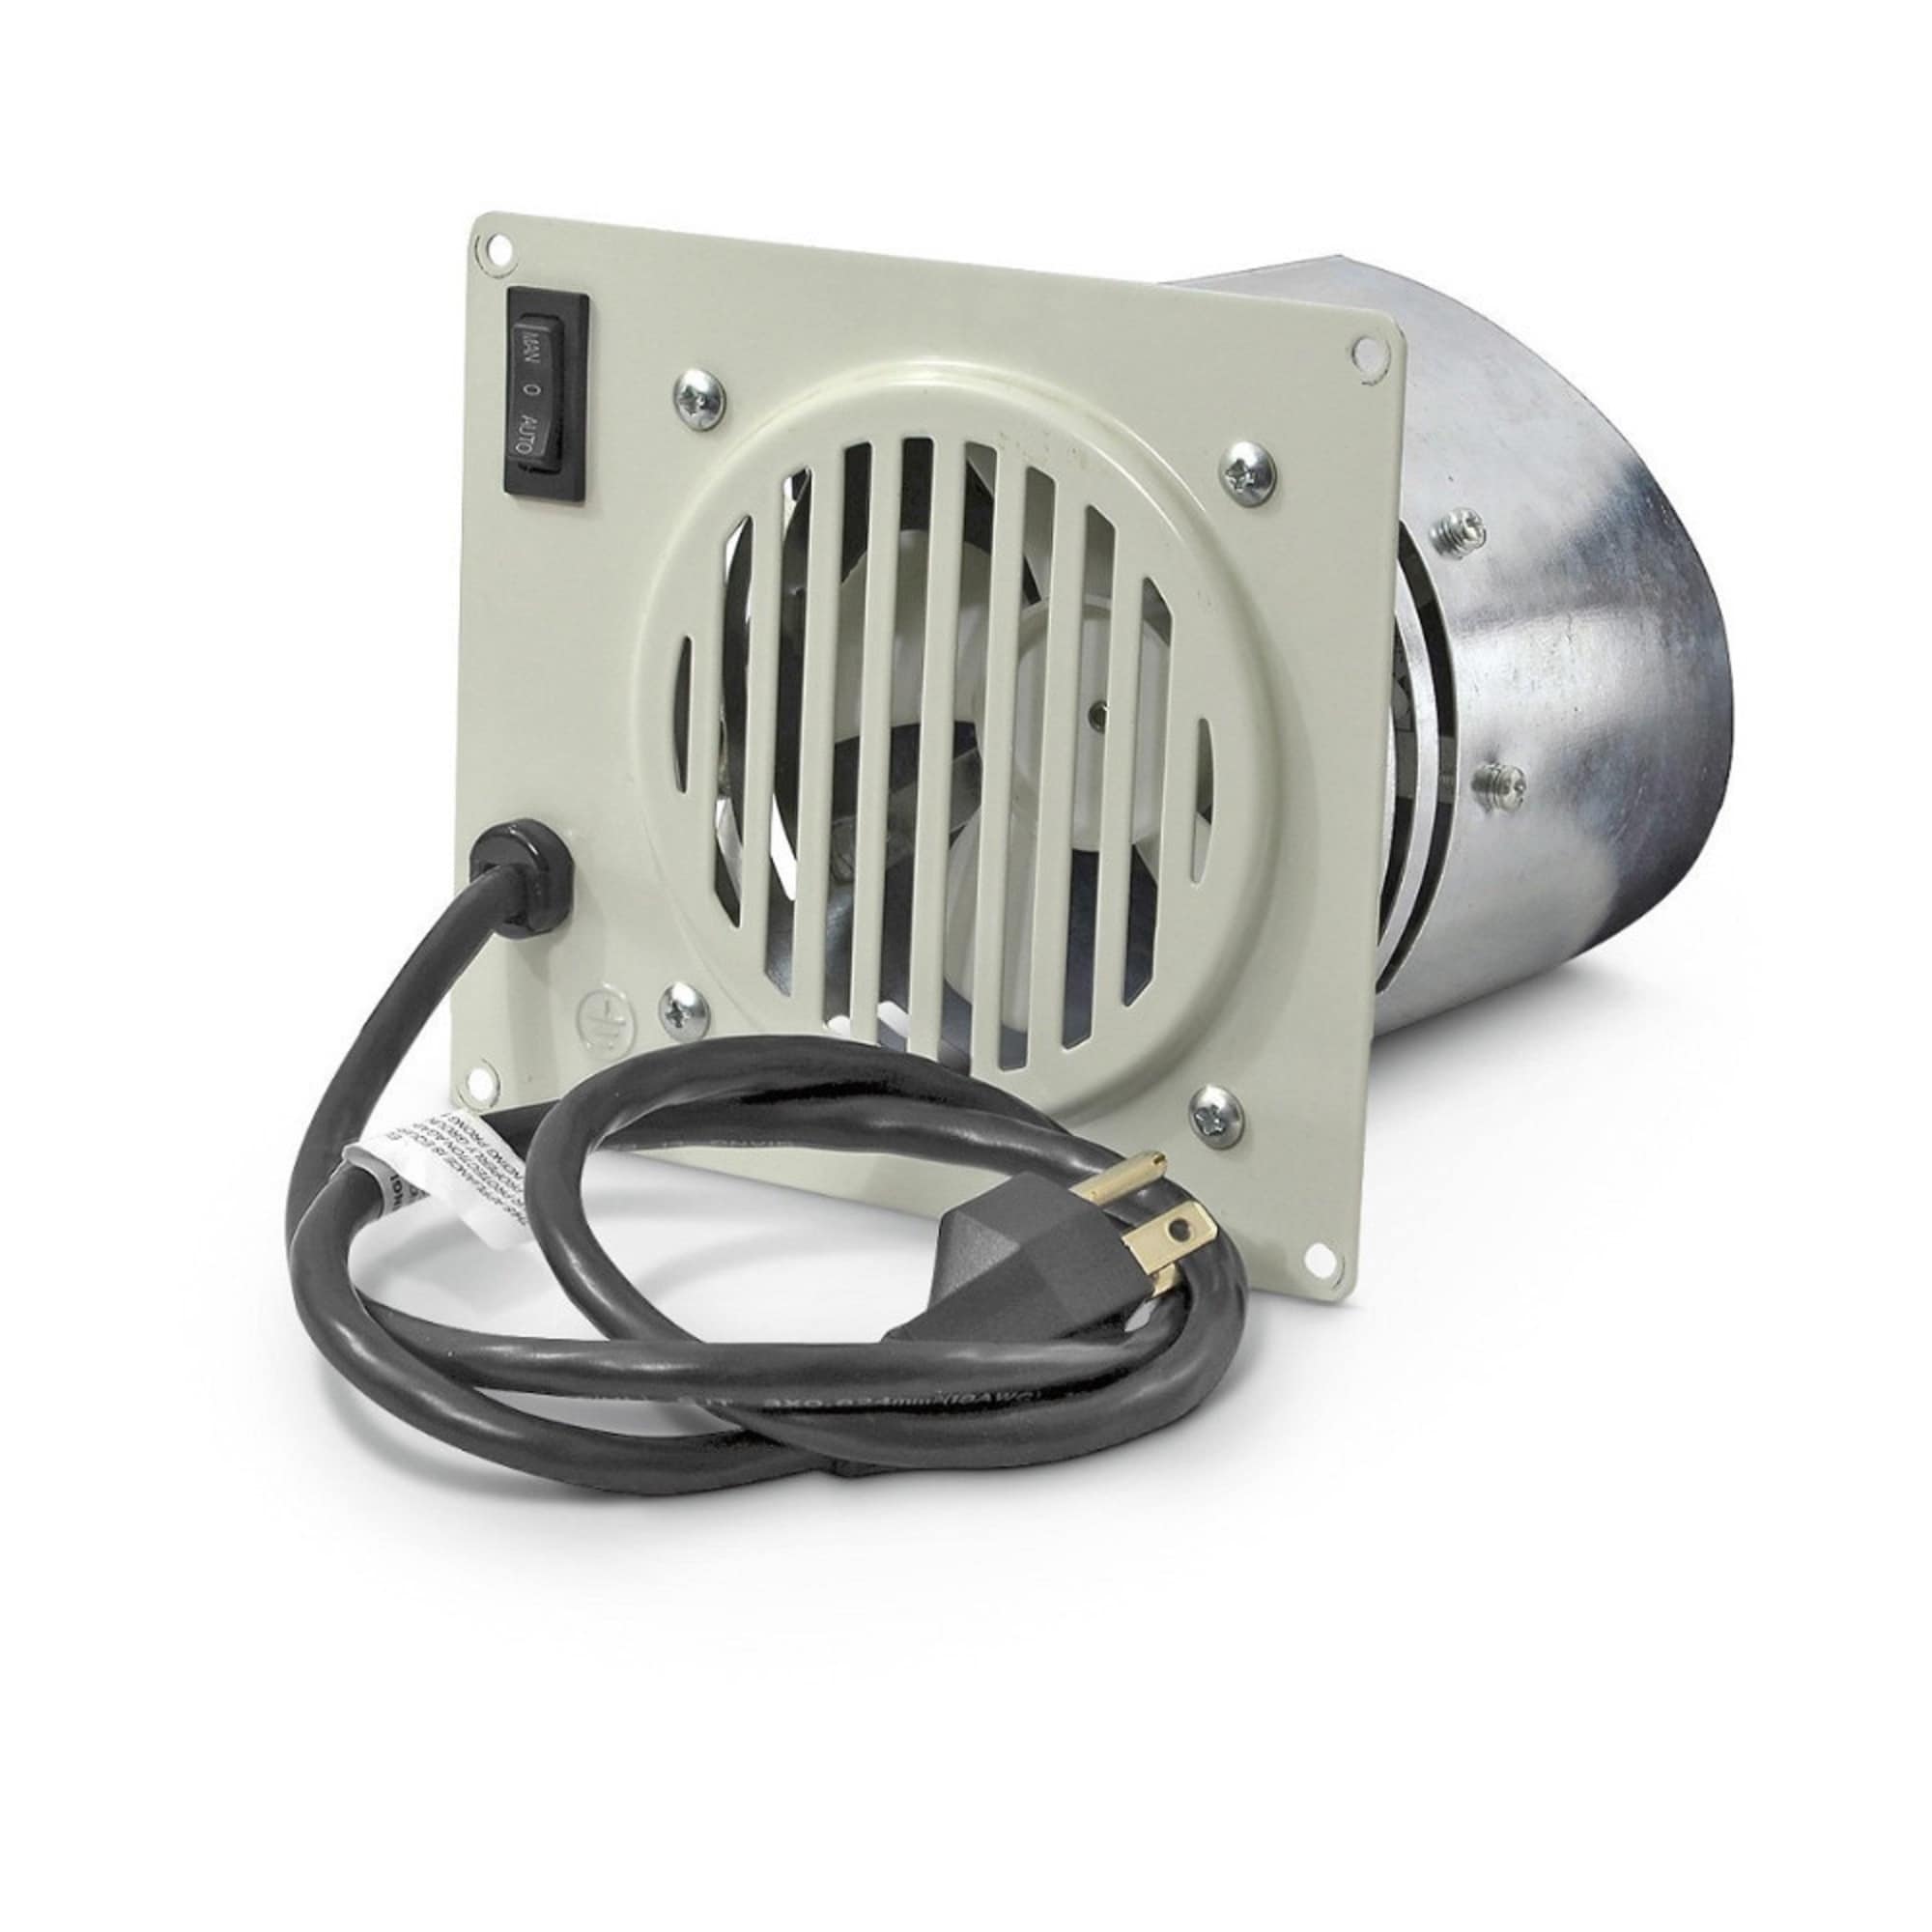 Mr. Heater Vent Free 30,000 BTU Radiant Propane Heater with Fan Blower